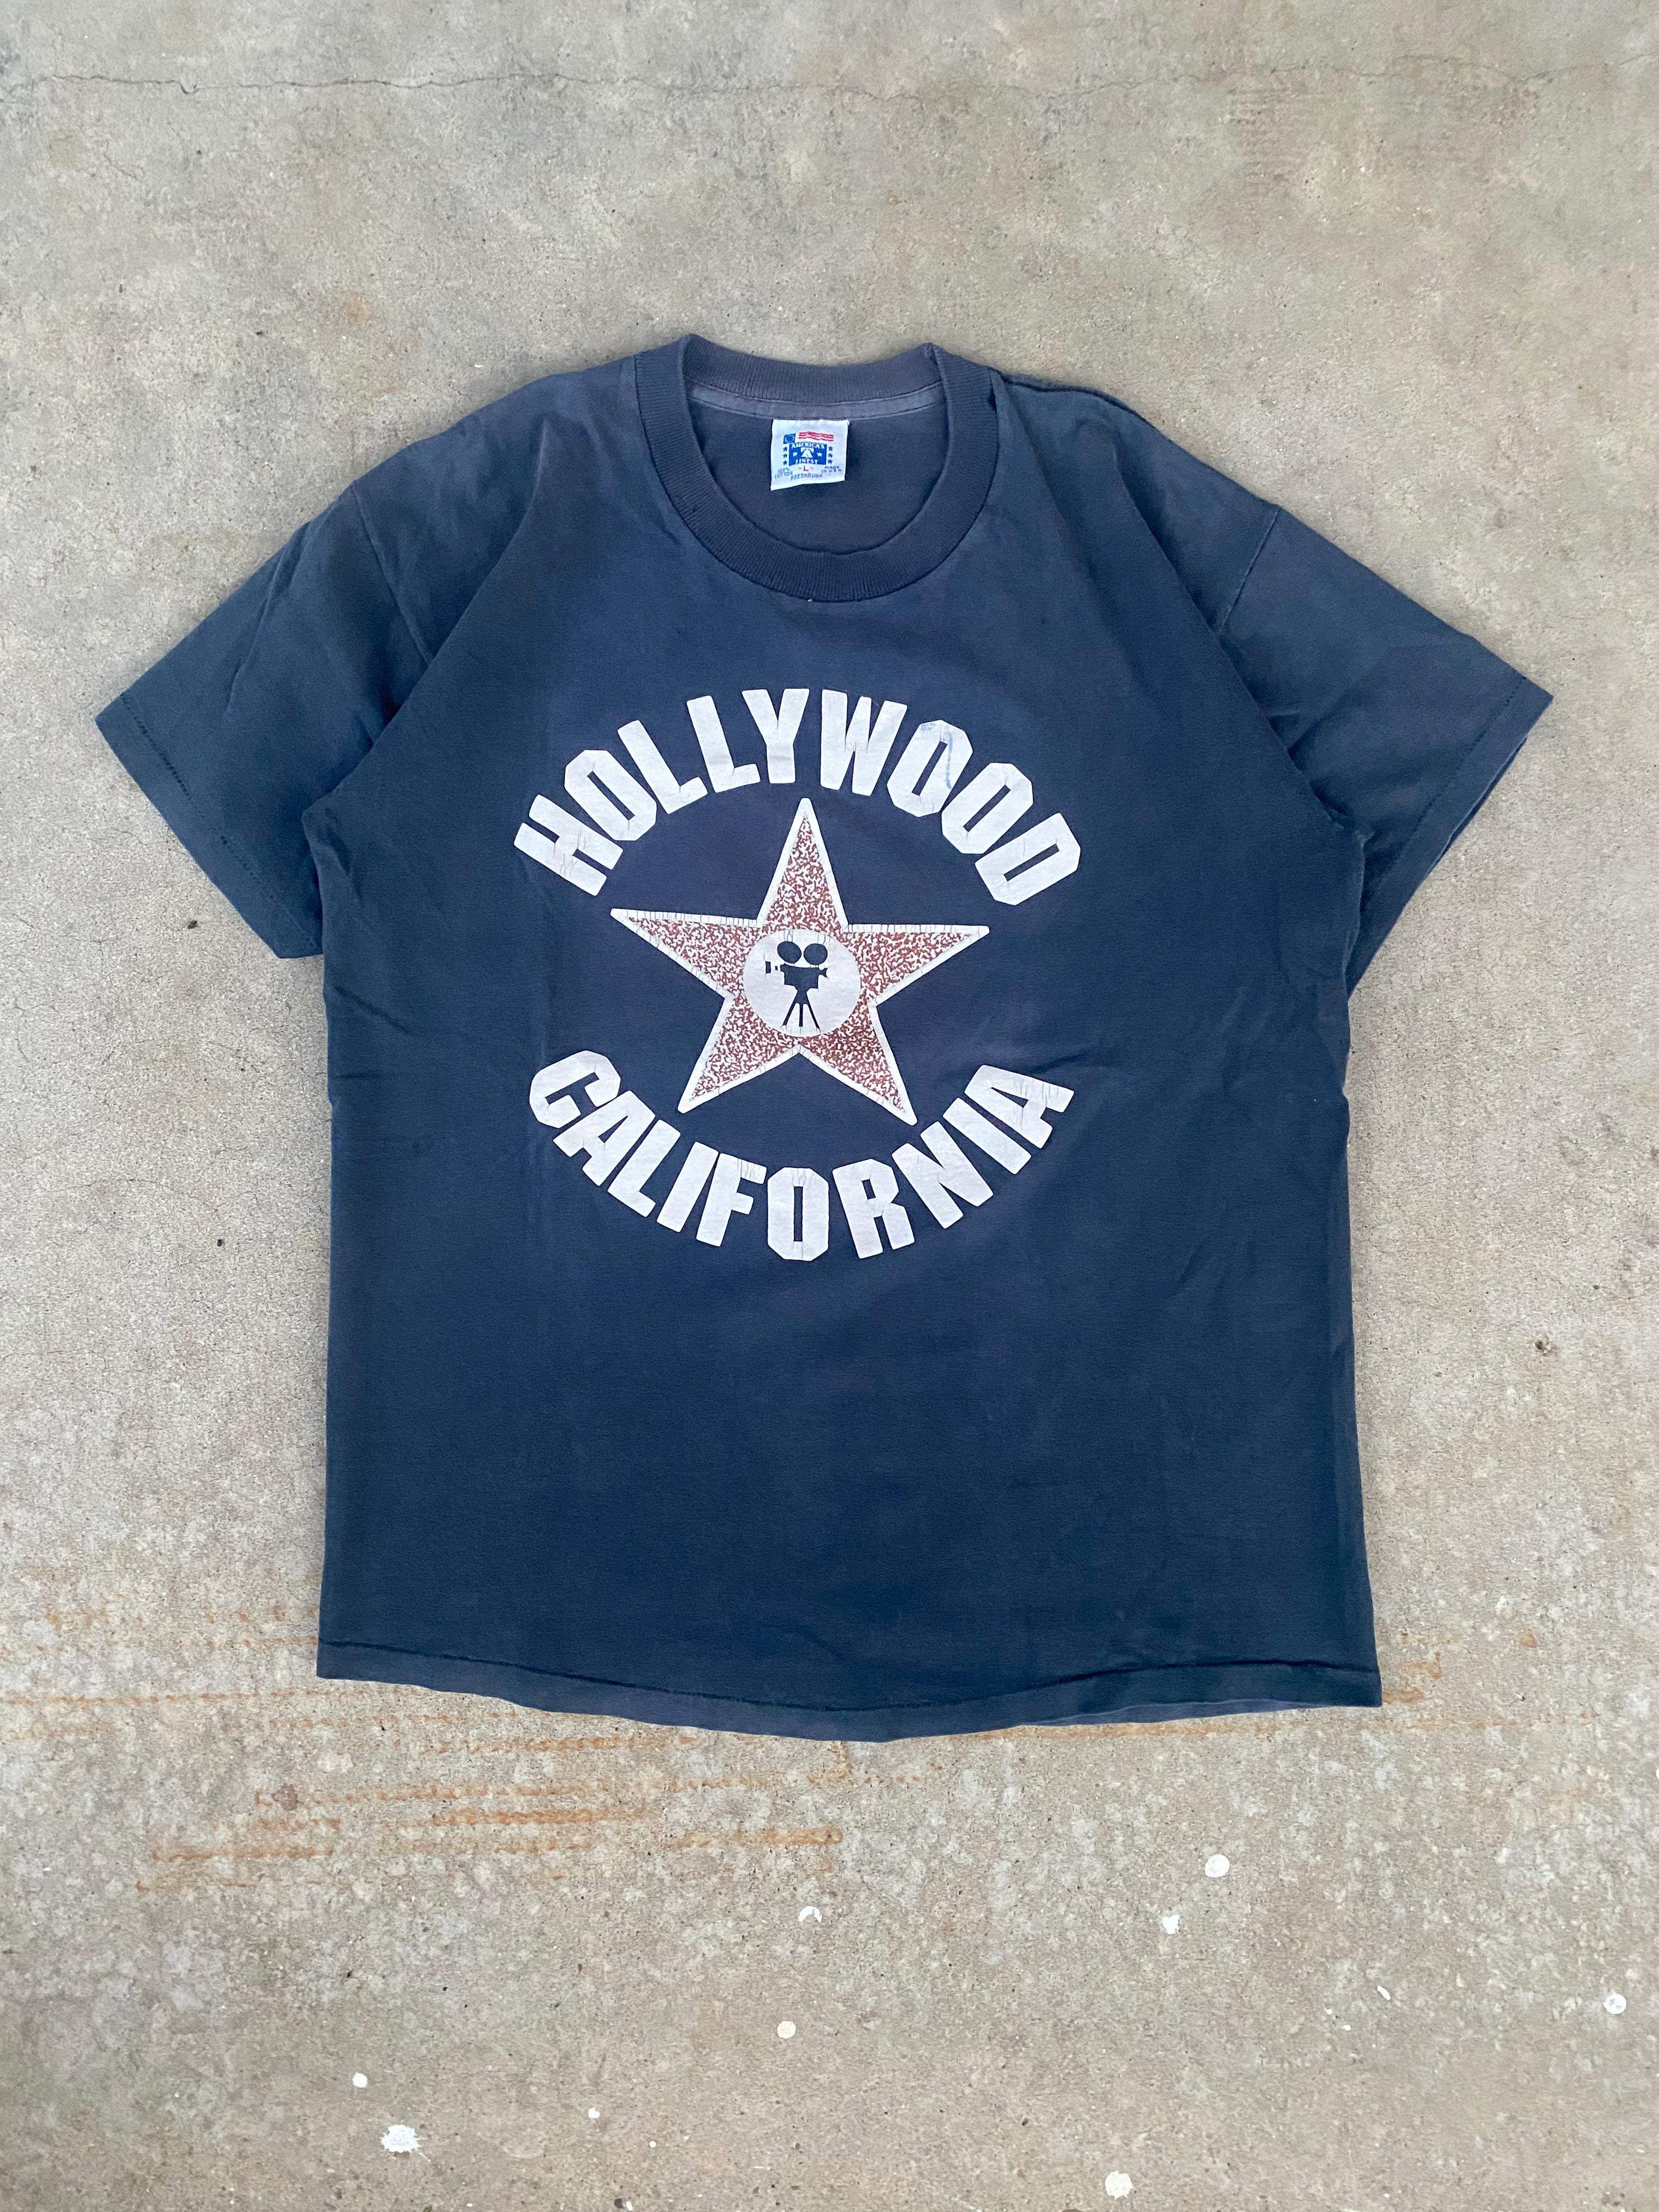 1990s Hollywood California T-Shirt (M)